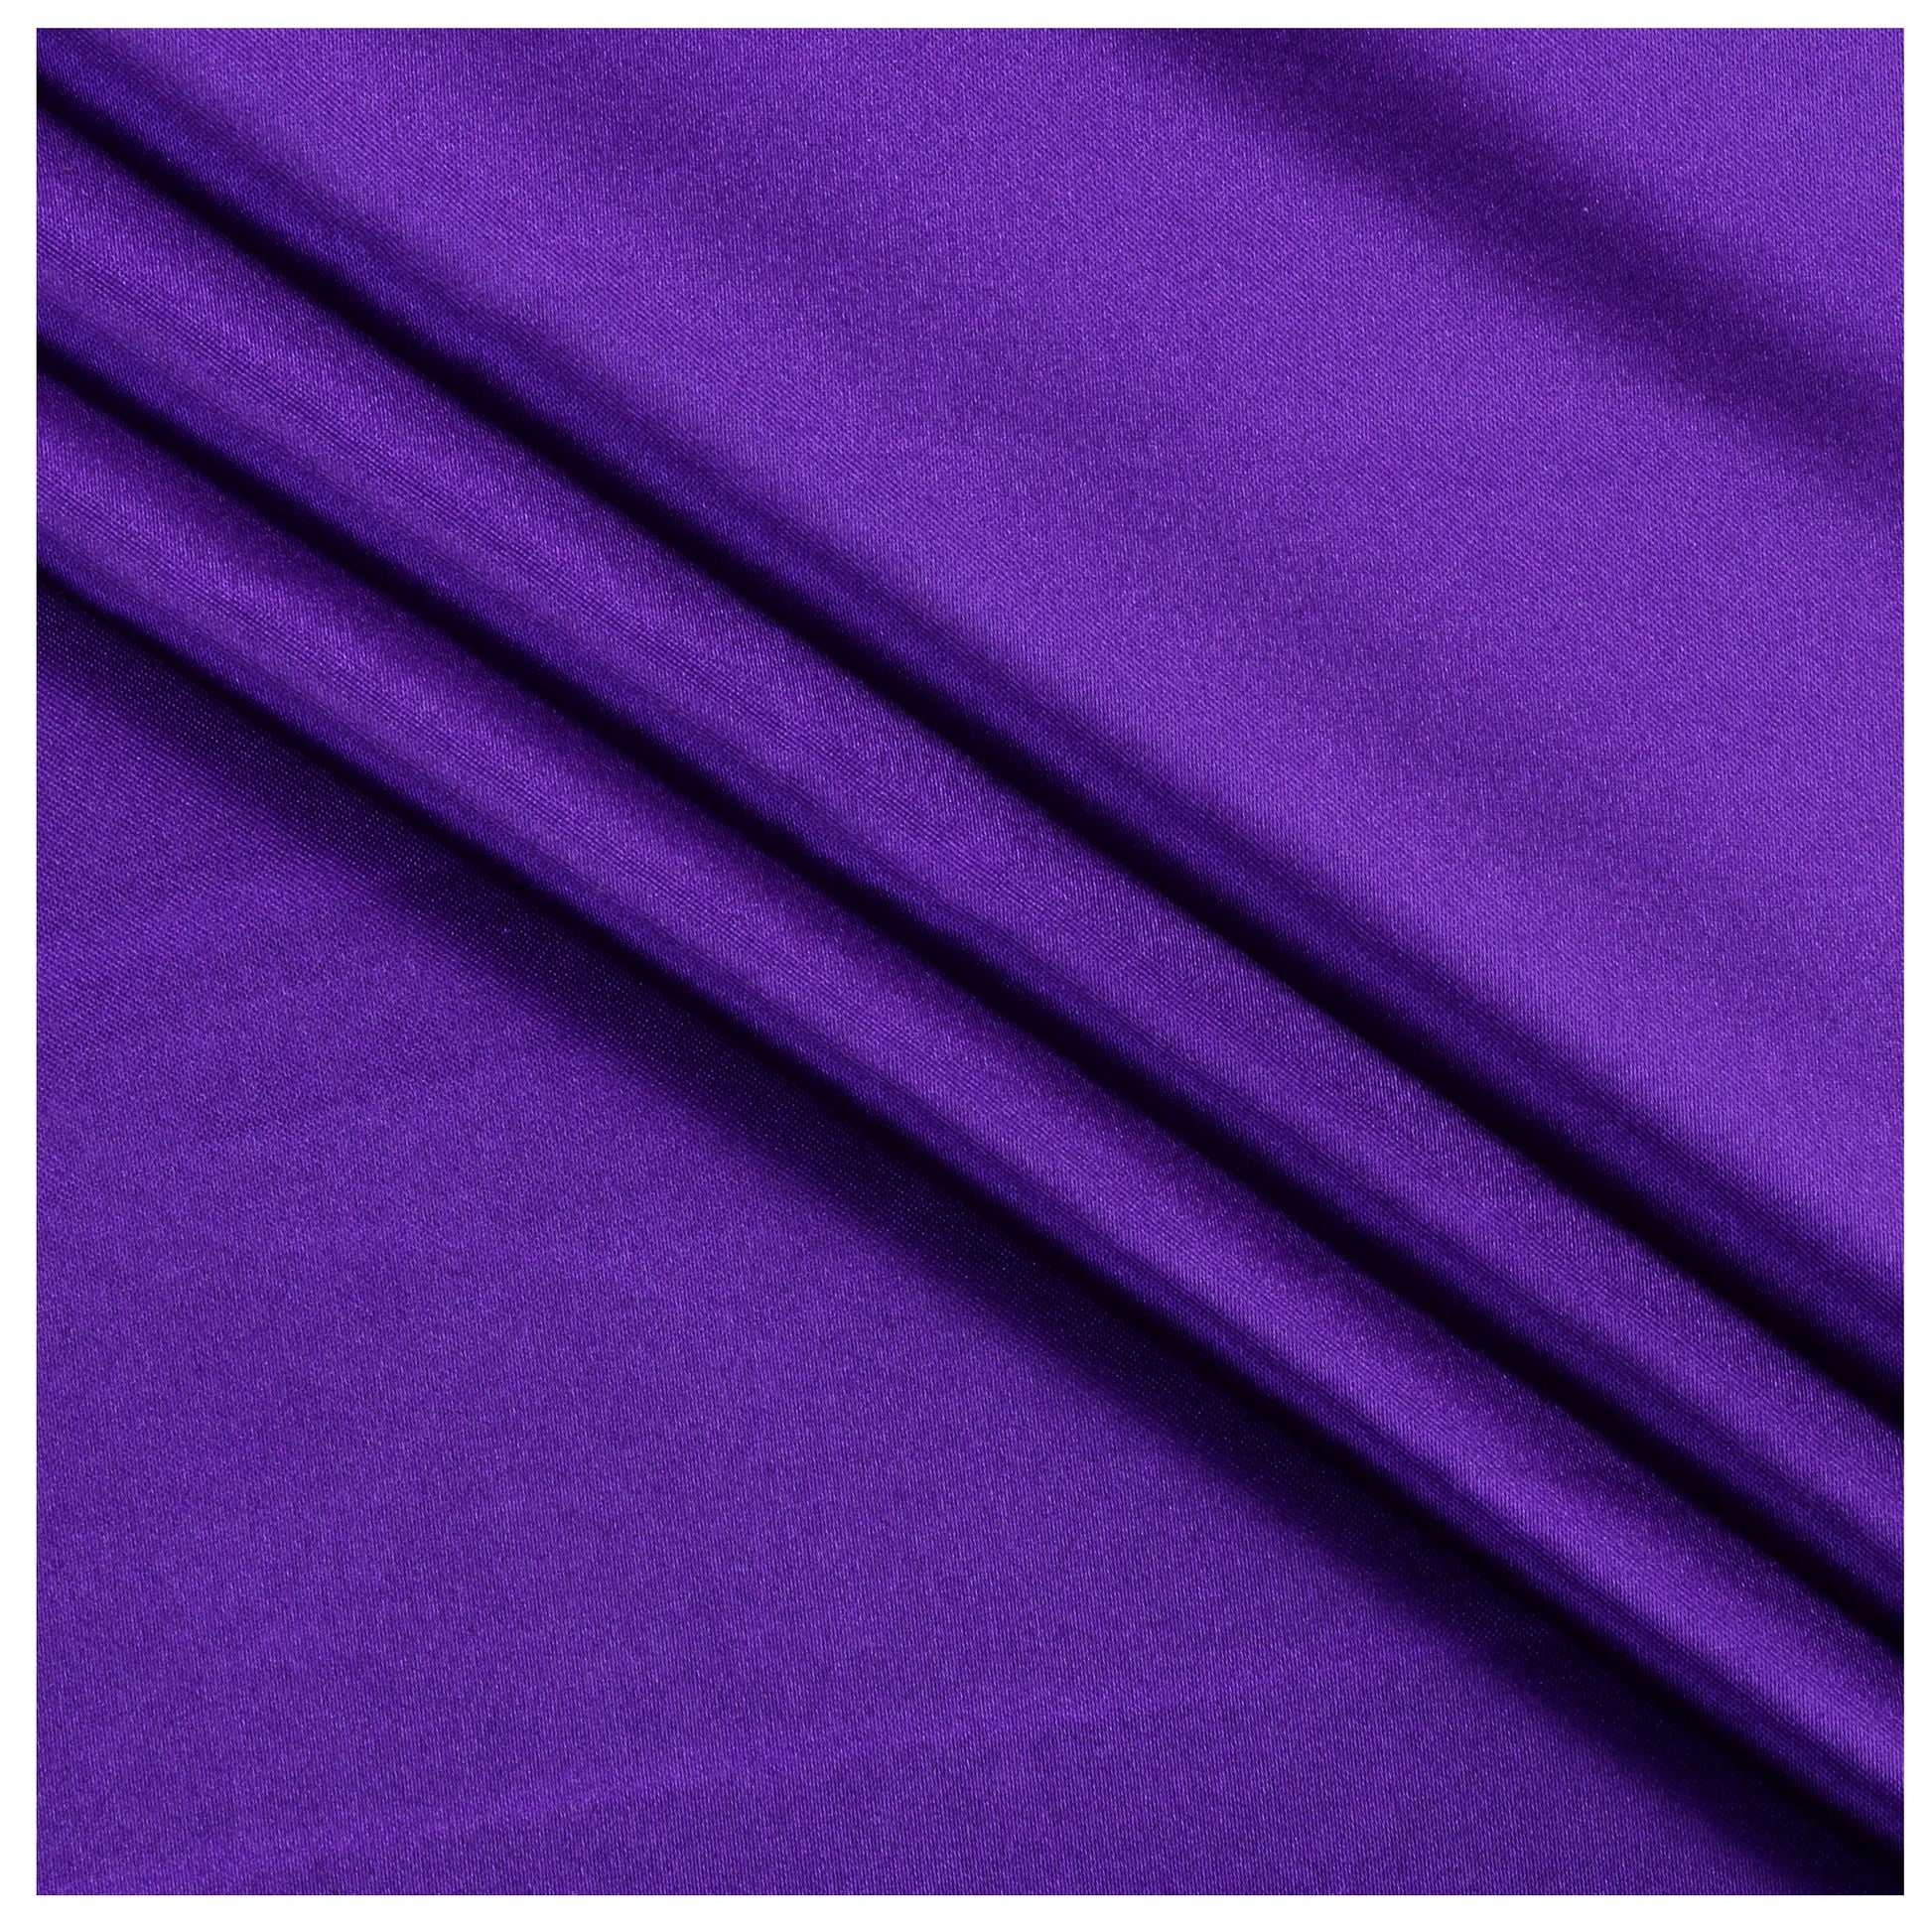 Cadbury Purple,2a255b2d-a005-473b-a6b0-720f7116da8b